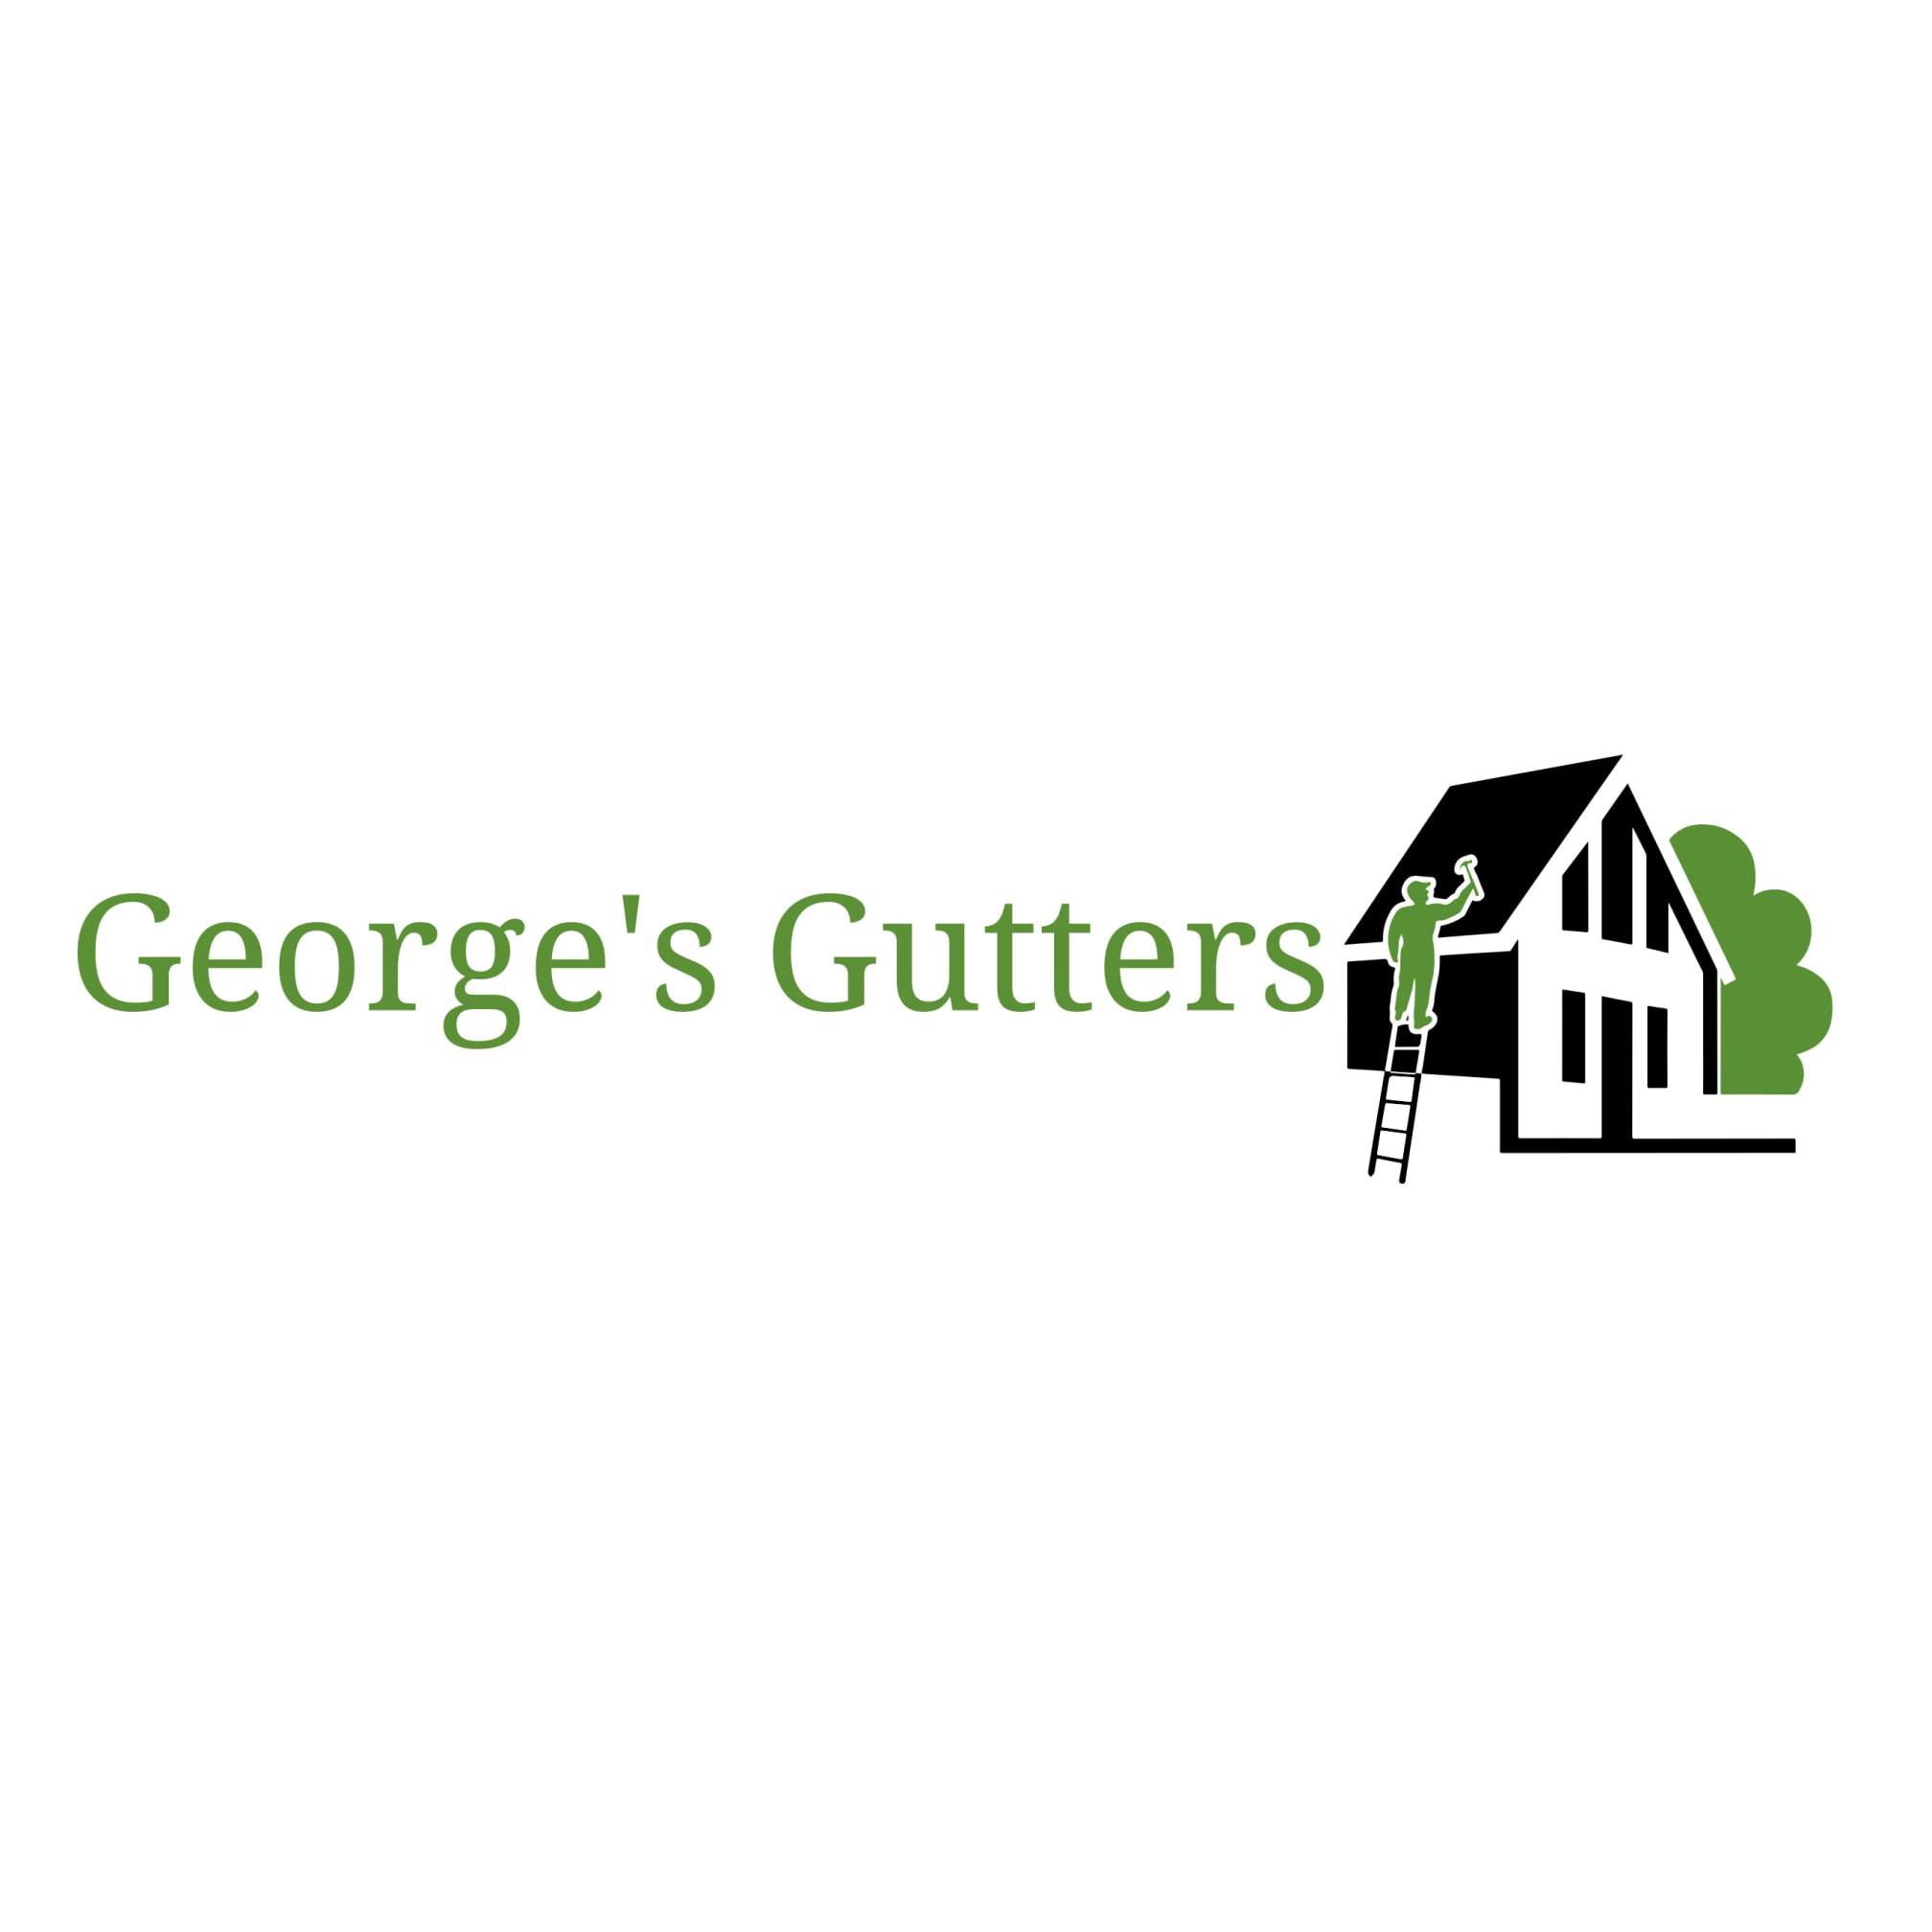 Georges Gutters Ltd - Harwich, Essex - 07585 131124 | ShowMeLocal.com